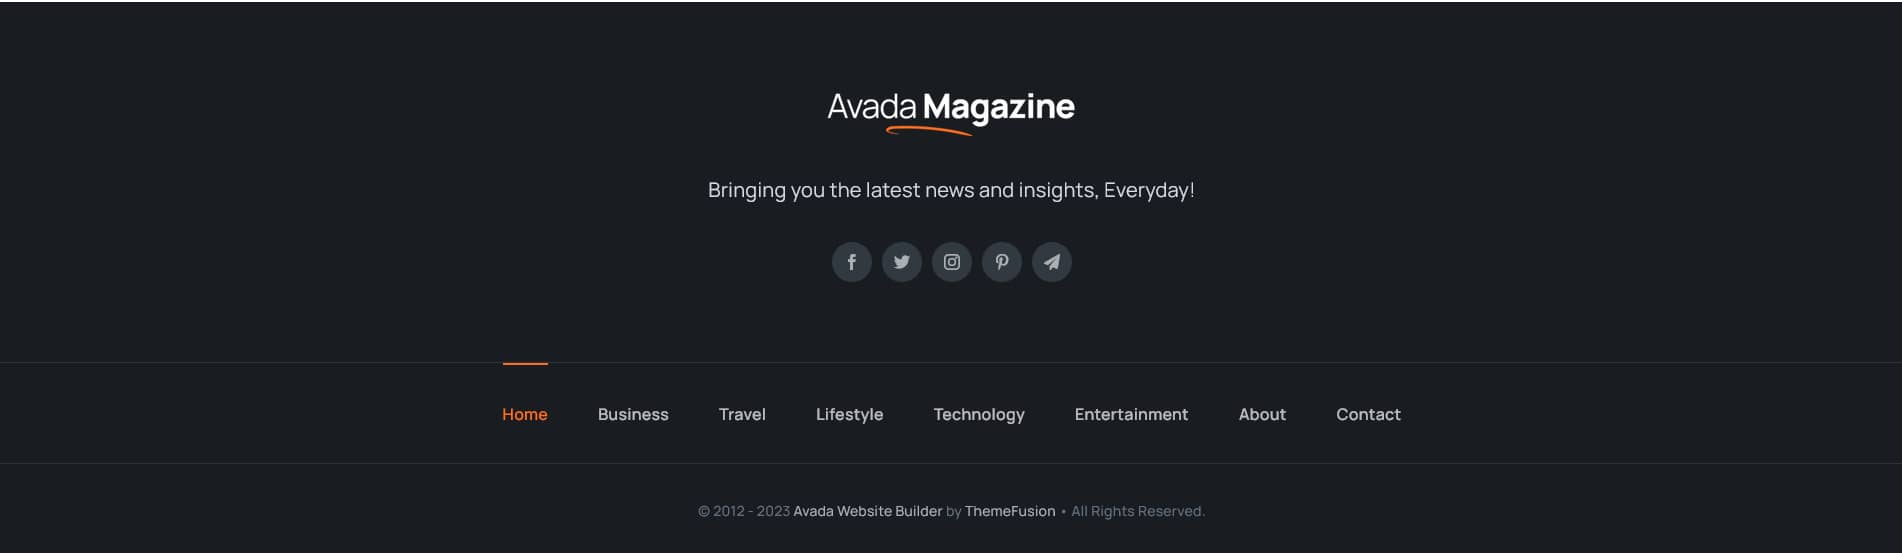 Avada Magazine Footer